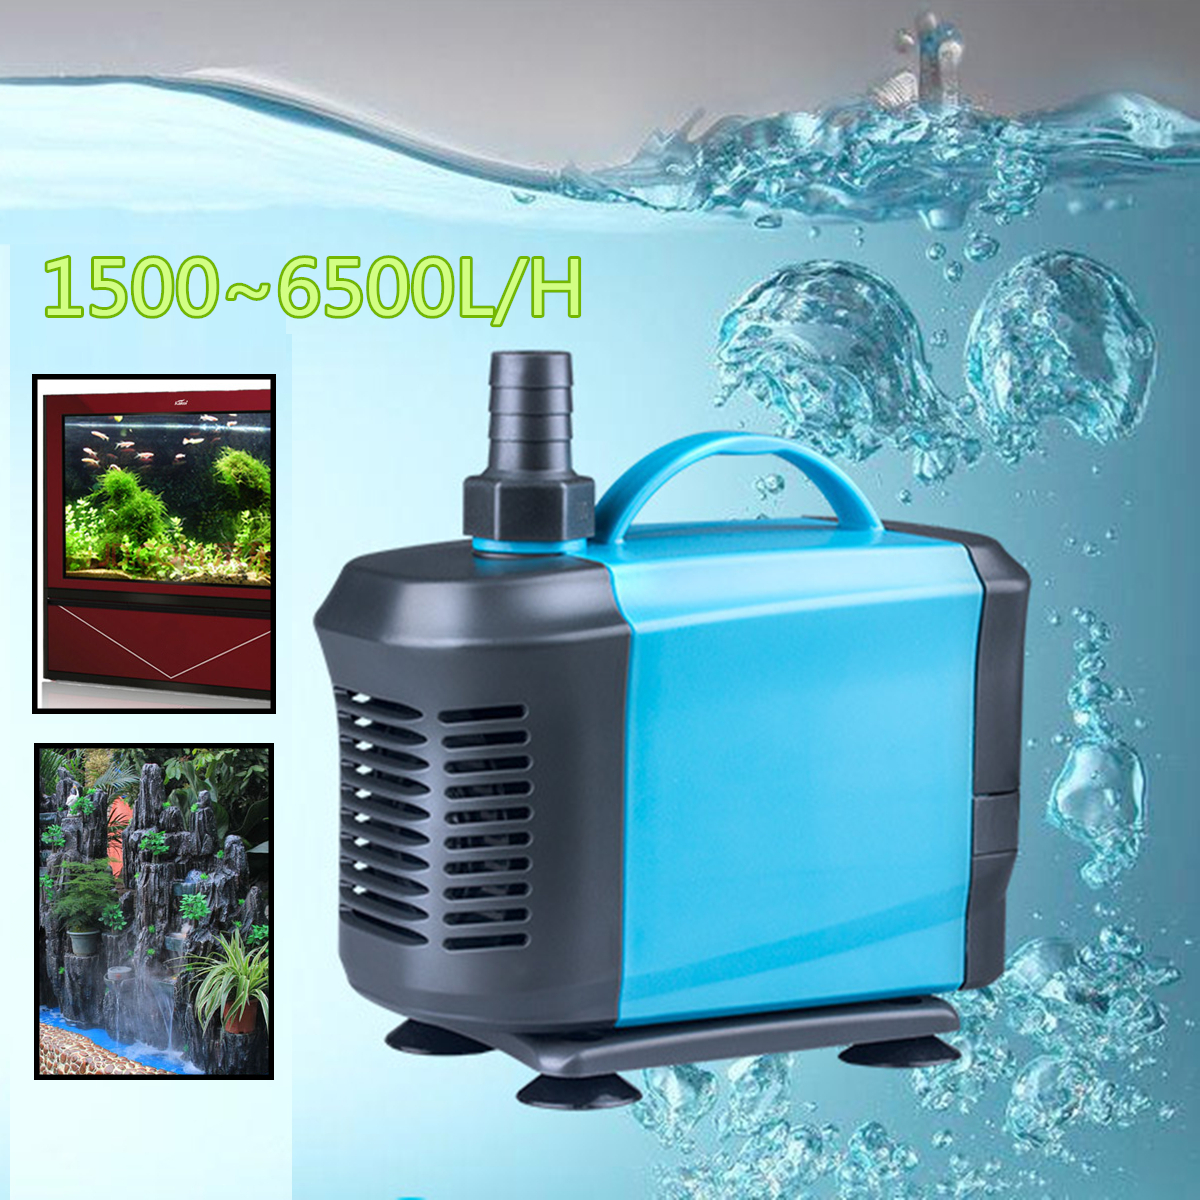 15006500LH-Submersible-Aquarium-Oxygen-Pump-Pond-Fish-Tank-Silent-Water-Filter-1255035-1